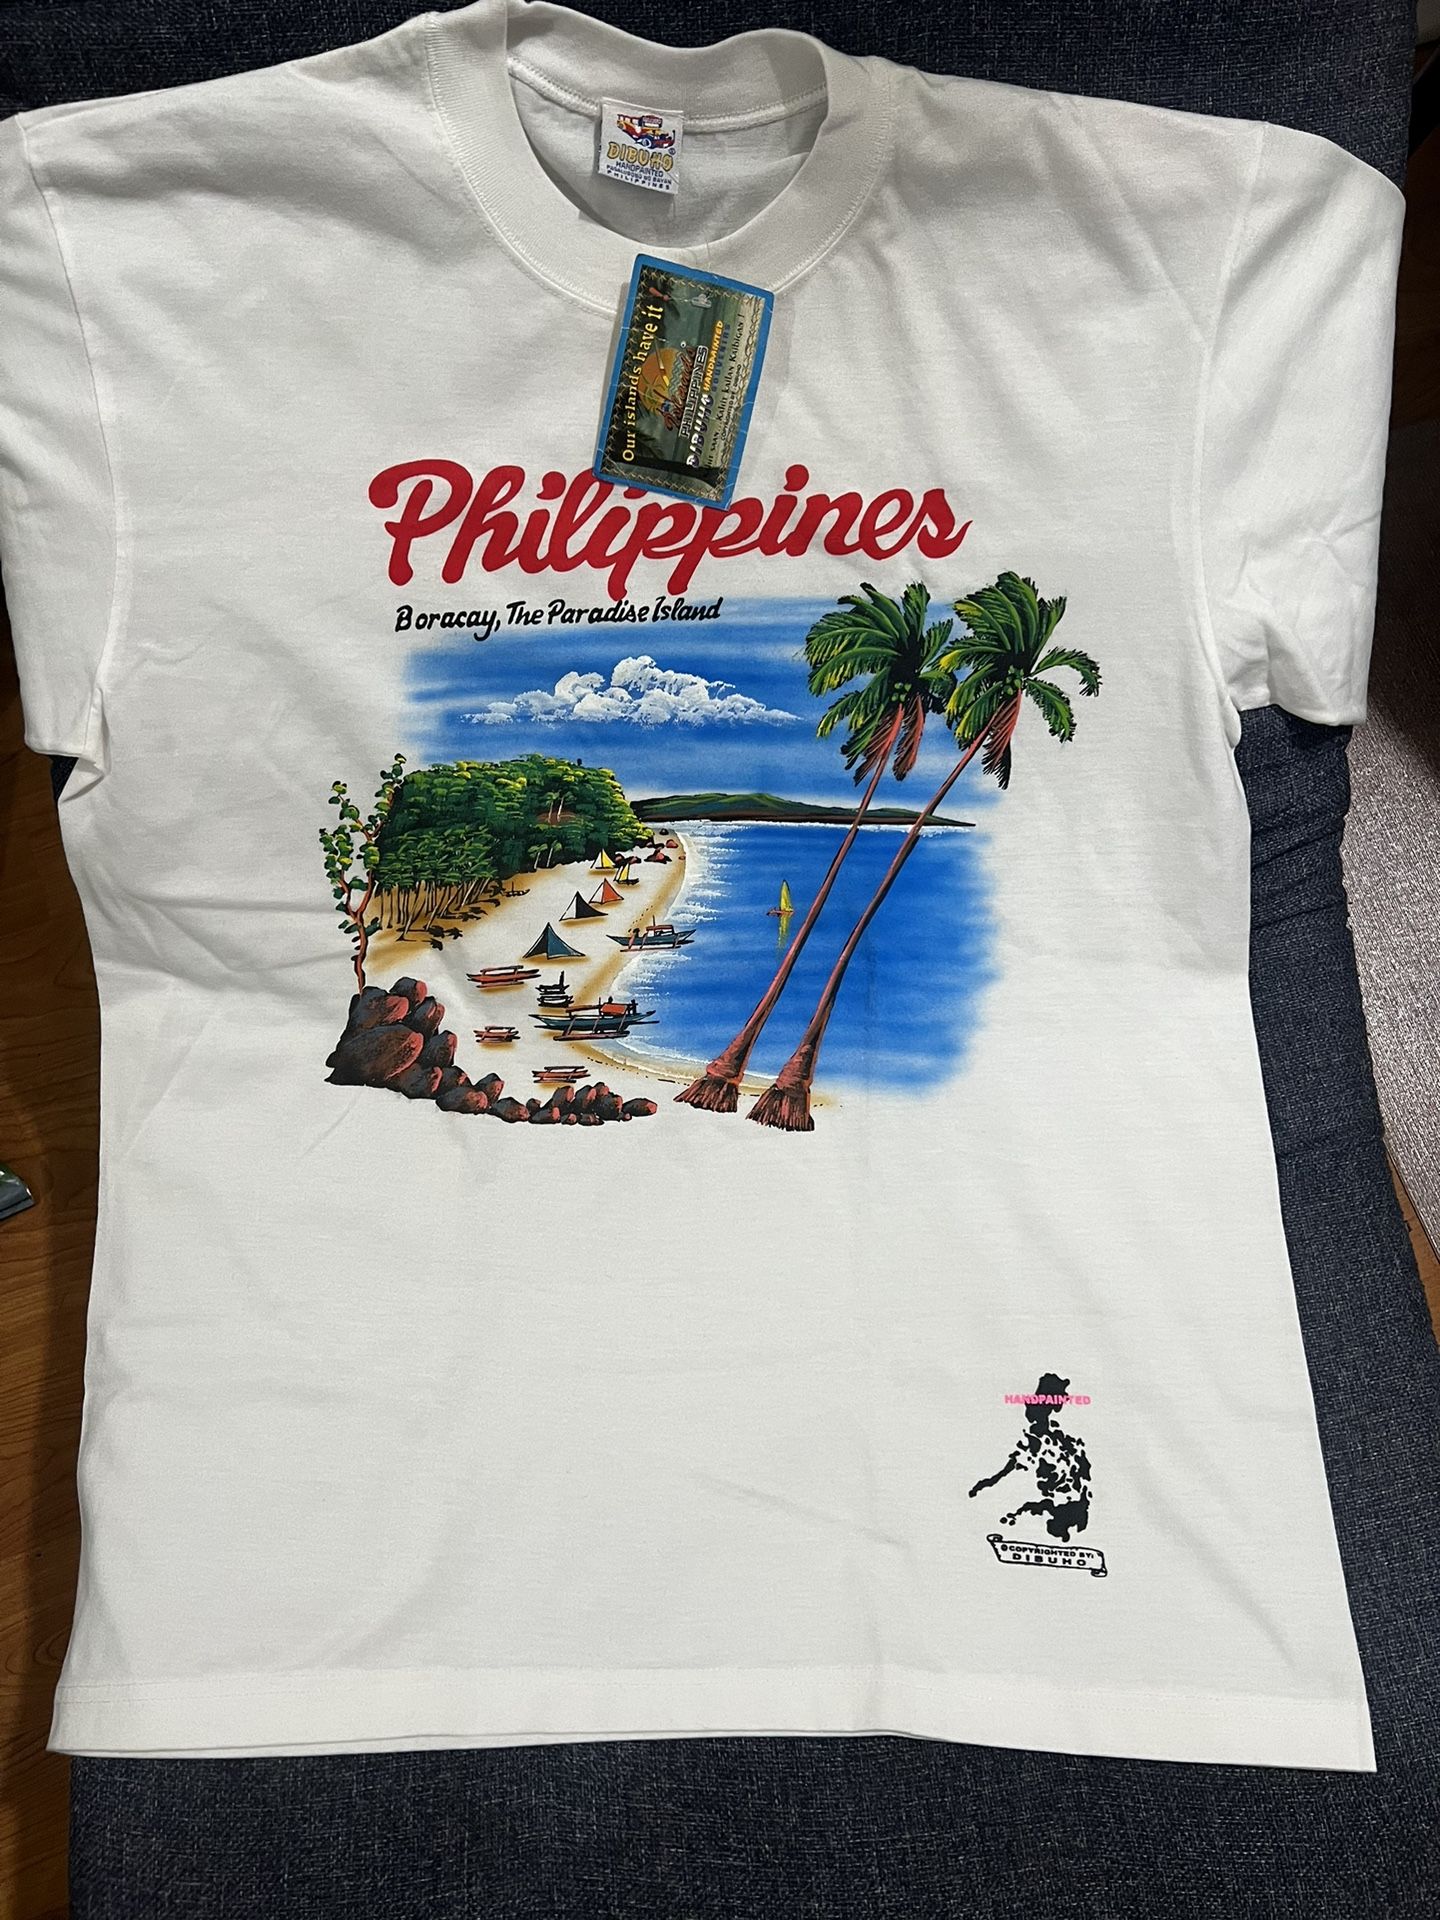 Boracay Philippines shirt